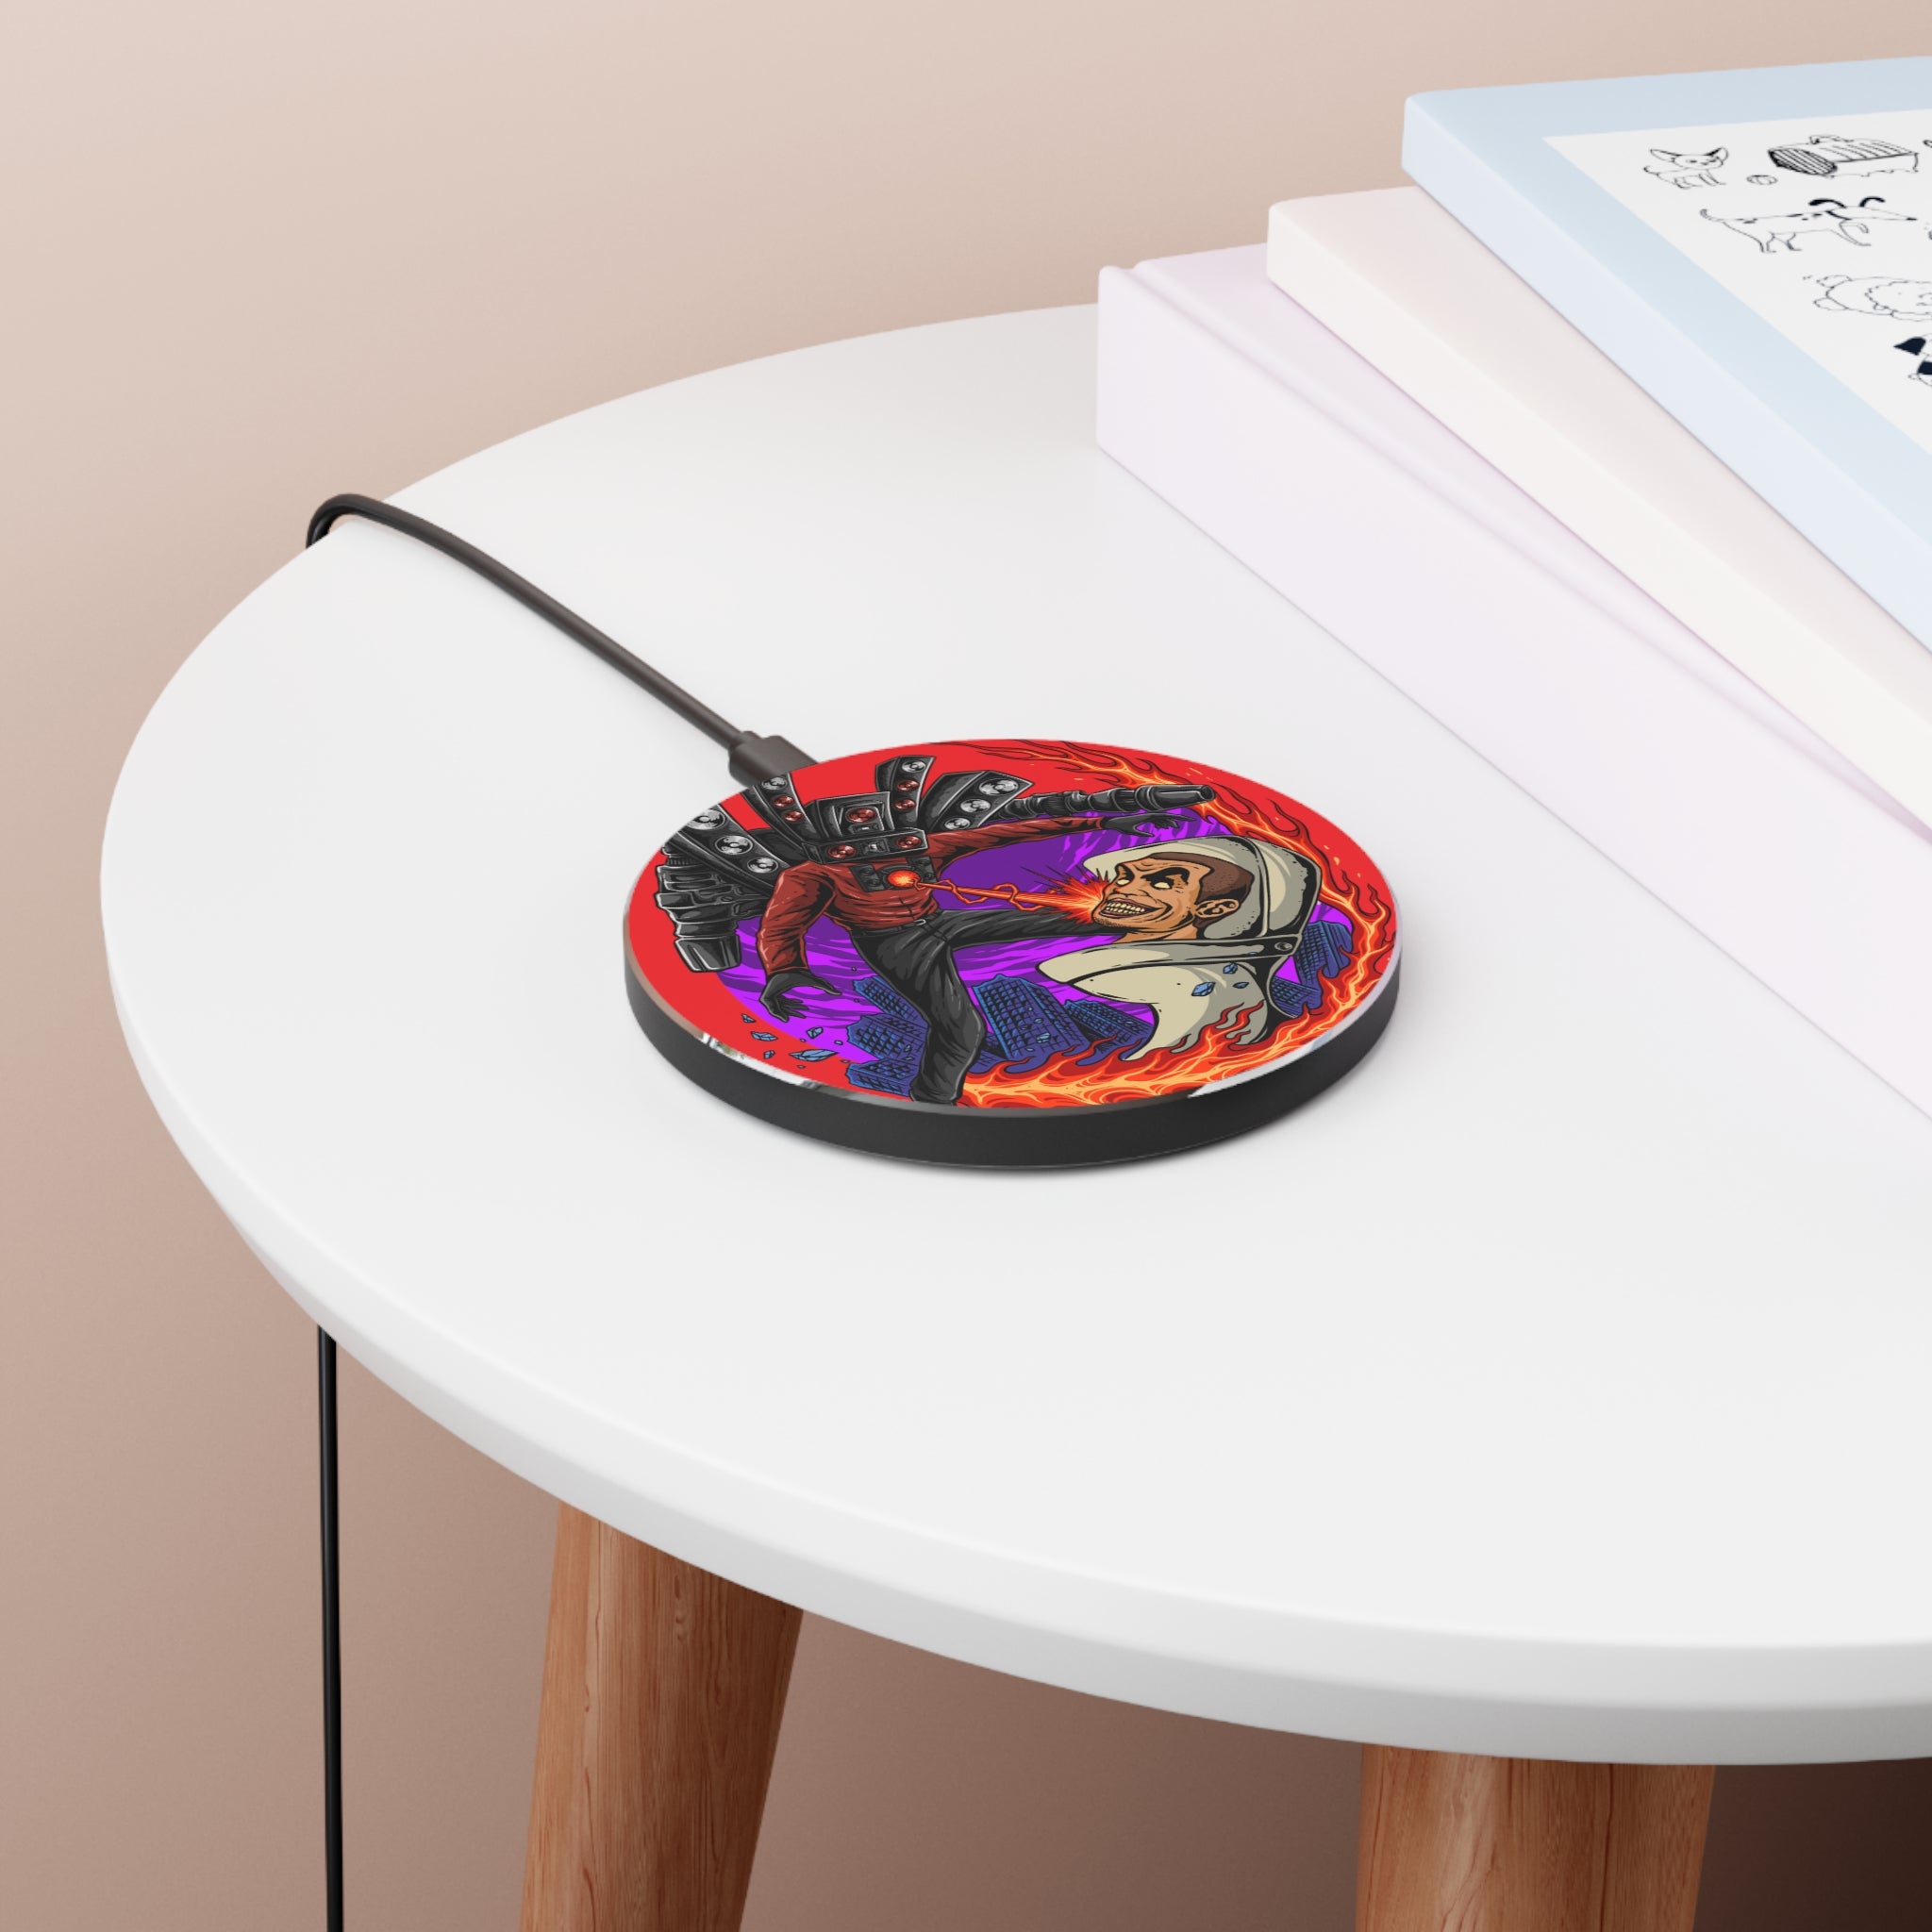 Speaker Blast Wireless charger showcasing Titan Speakerman's epic battle on side table with books